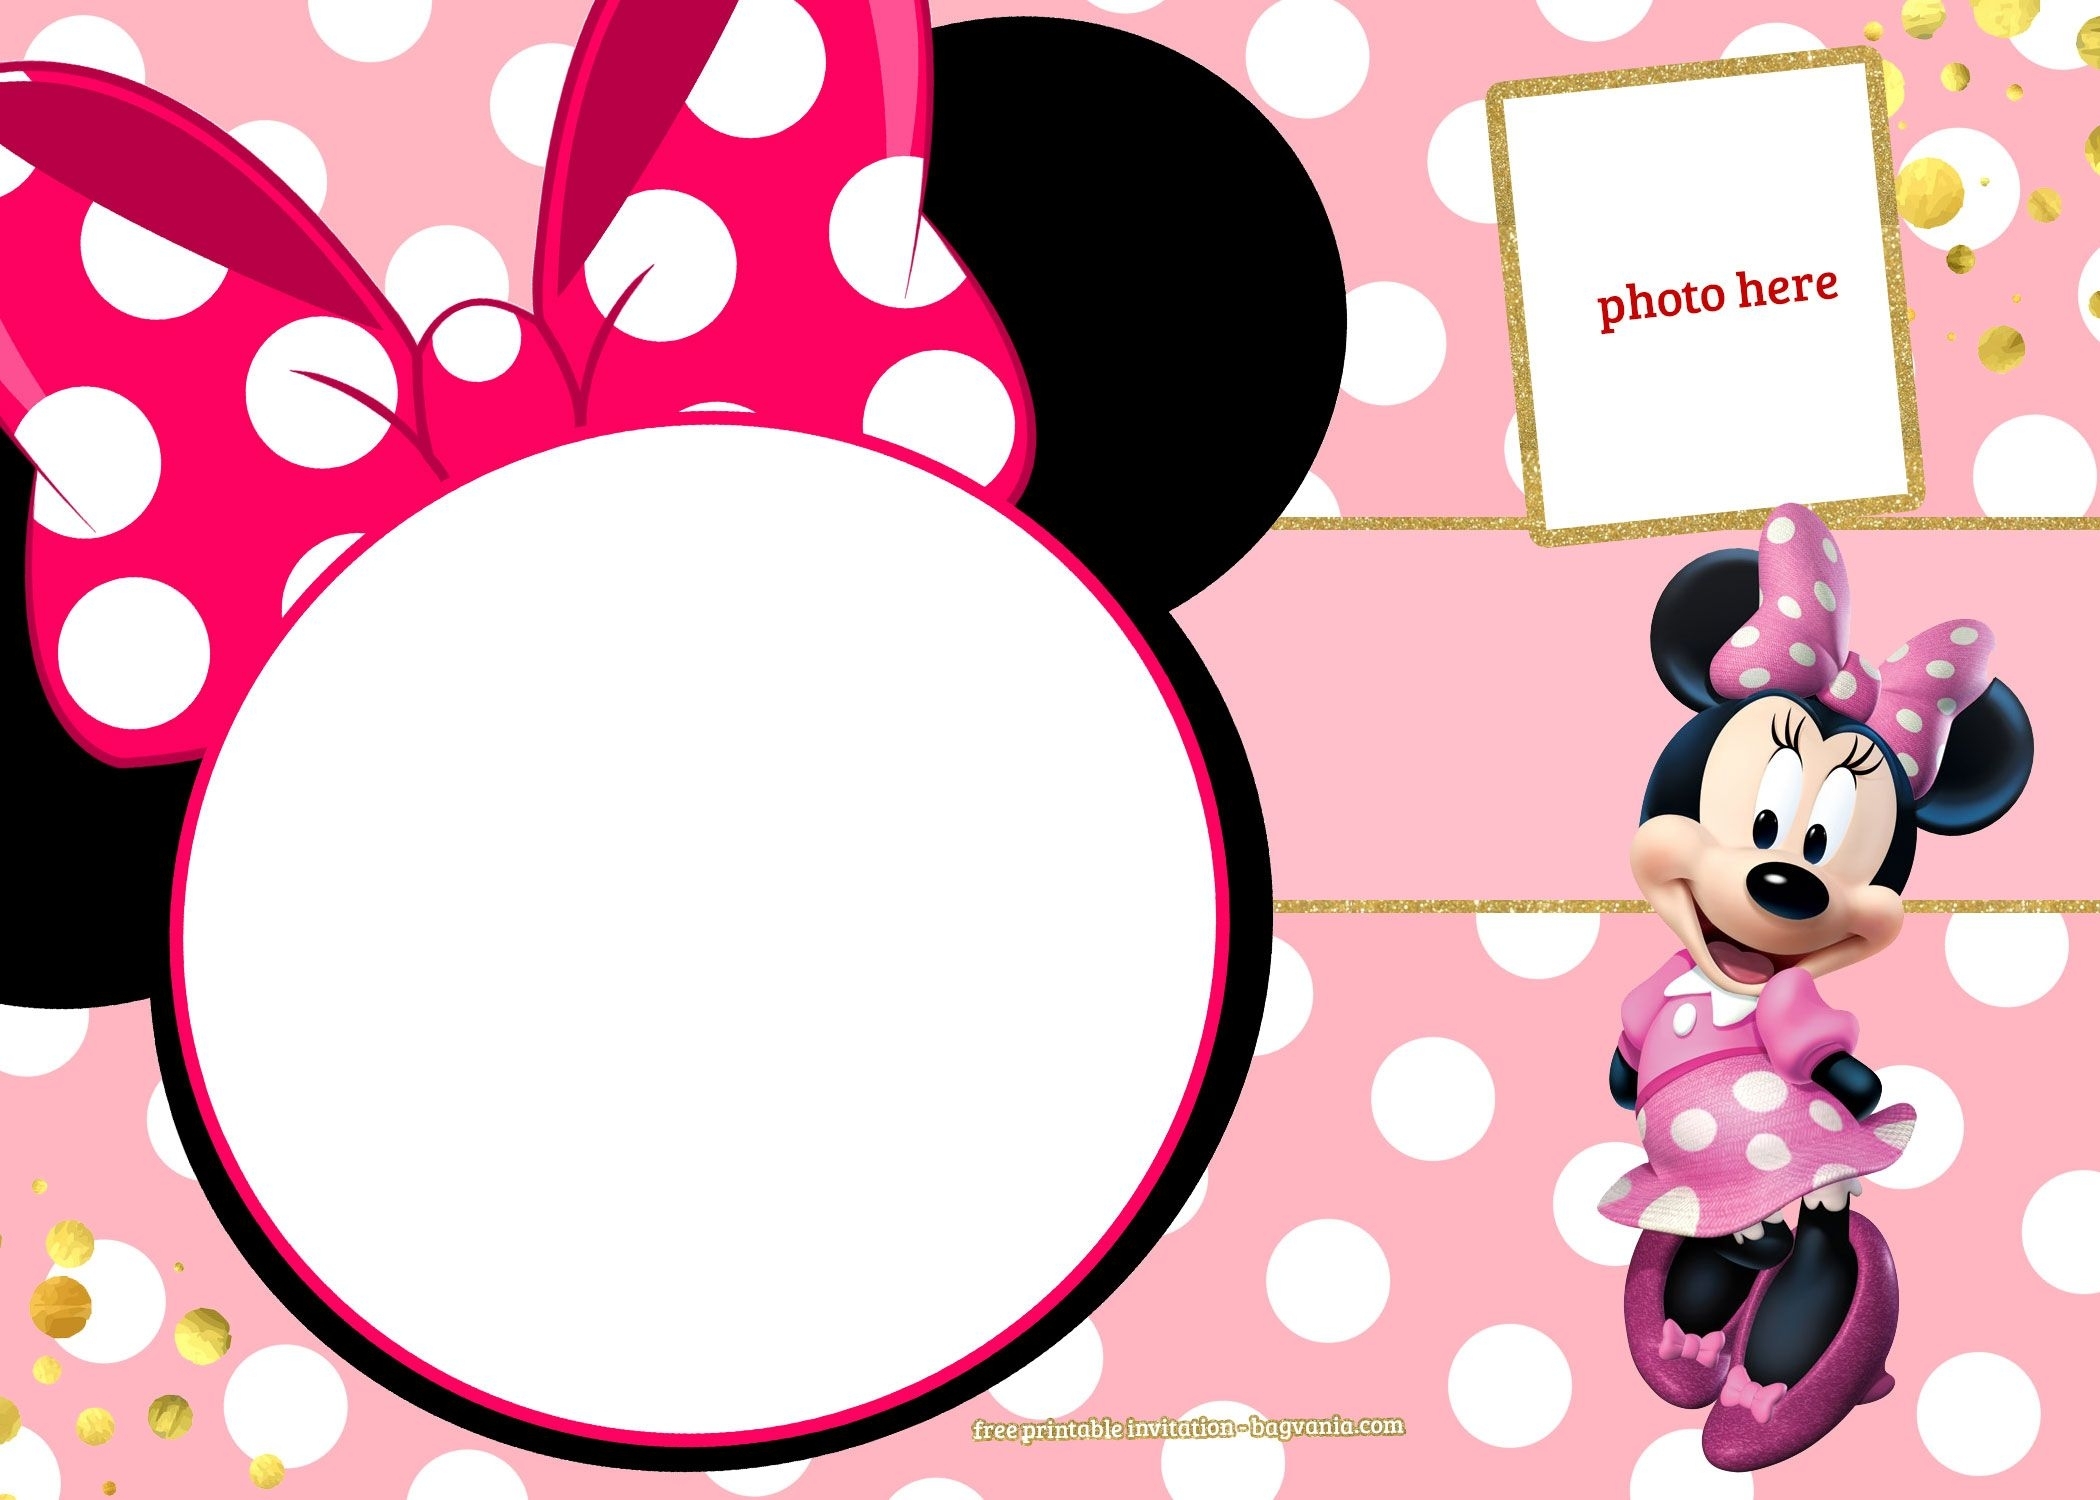 Minnie Mouse Head Invitation Template • Business Template Ideas Within Minnie Mouse Card Templates